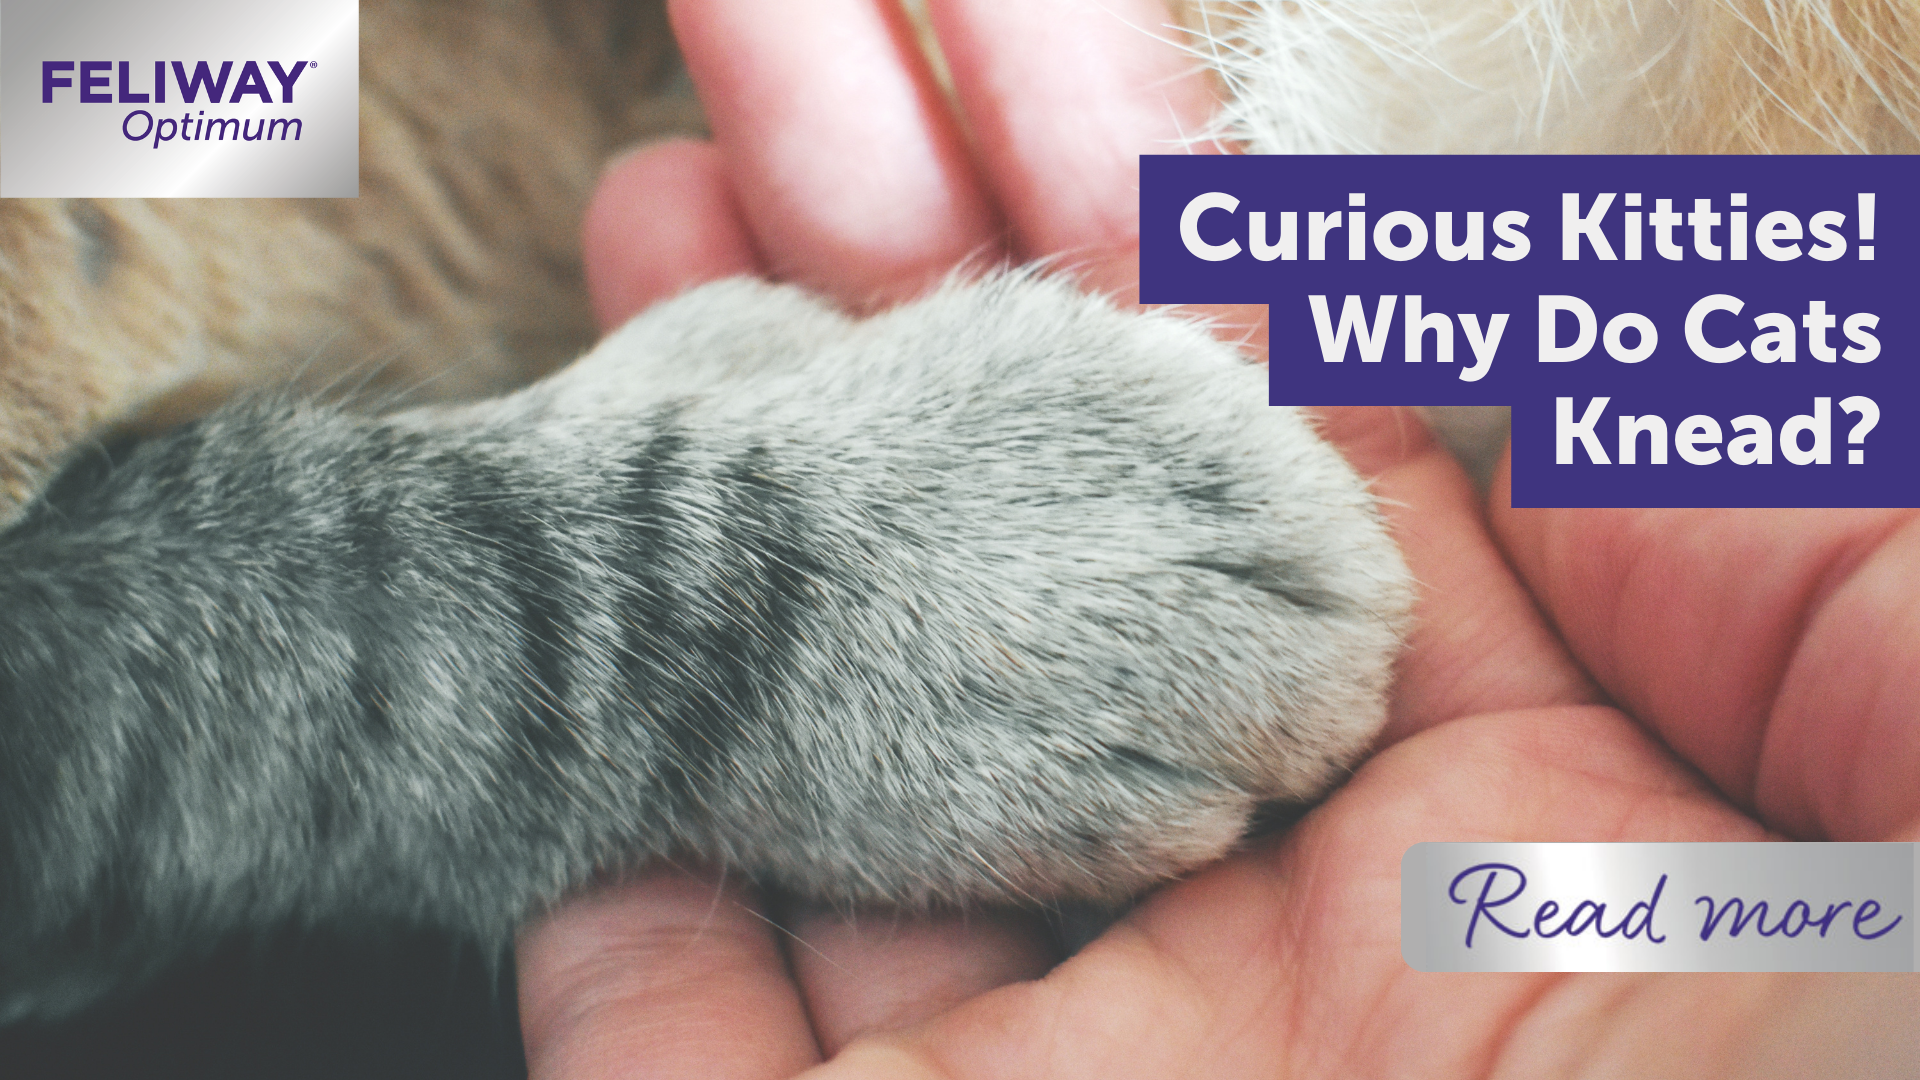 Curious Kitties! Why Do Cats Knead?